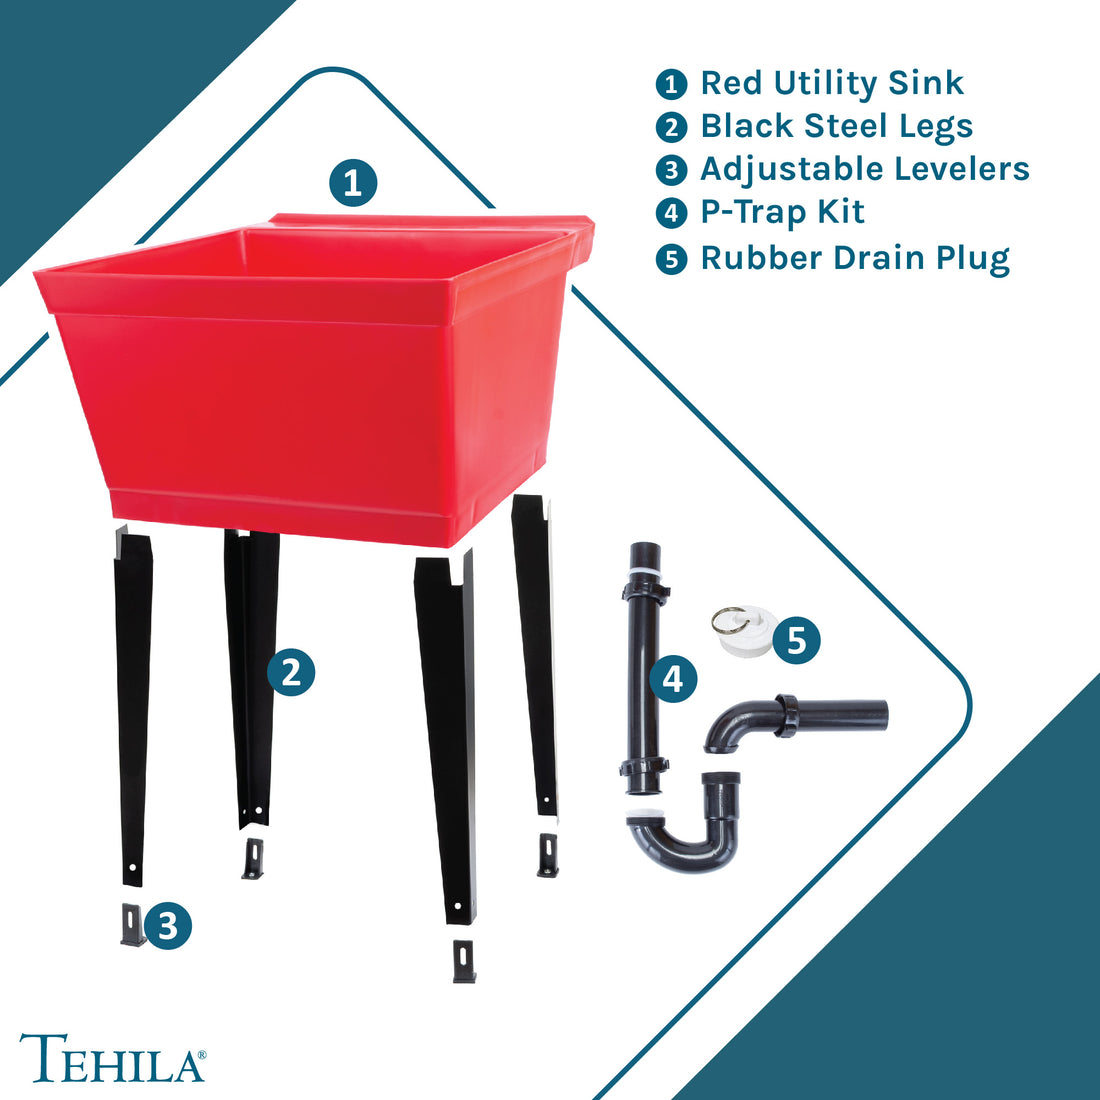 Standard Utility Sink | Red Utility Sink | Black Steel Legs | Adjustable Levelers | P-Trap Kit | Rubber Drain Plug